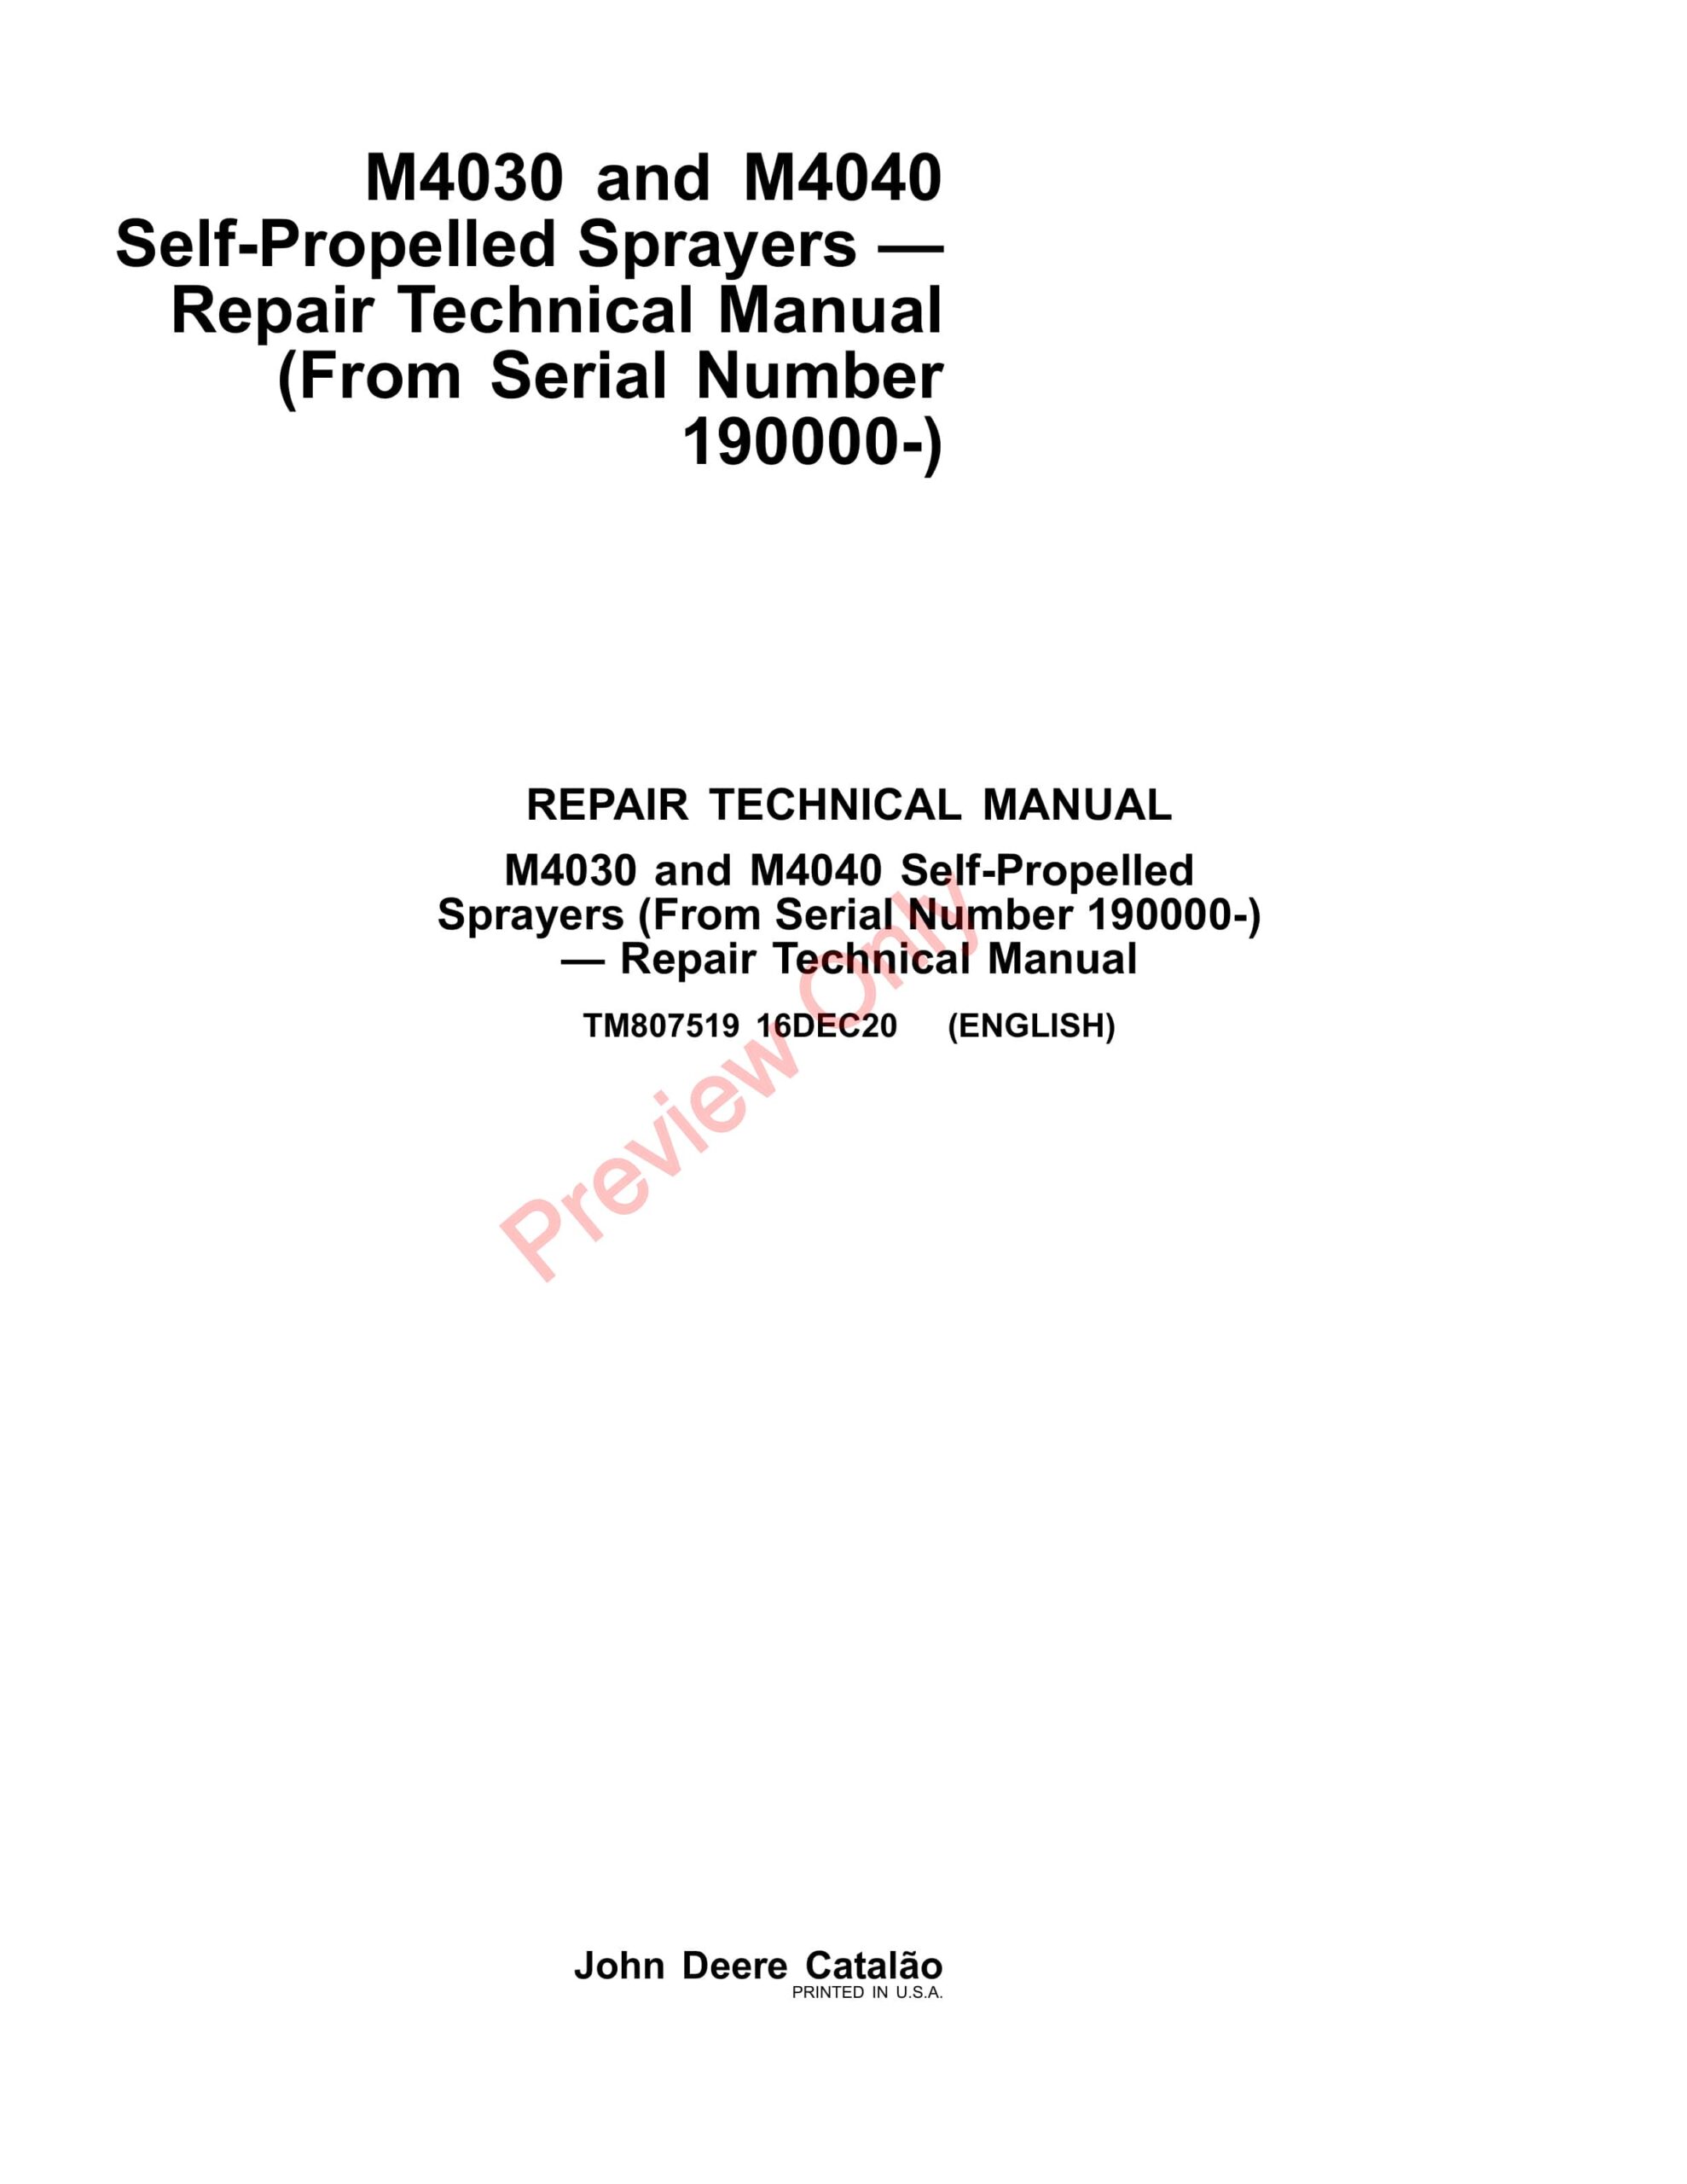 John Deere M4030 and M4040 Self-Propelled Sprayers Repair Technical Manual TM807519 16DEC20-1